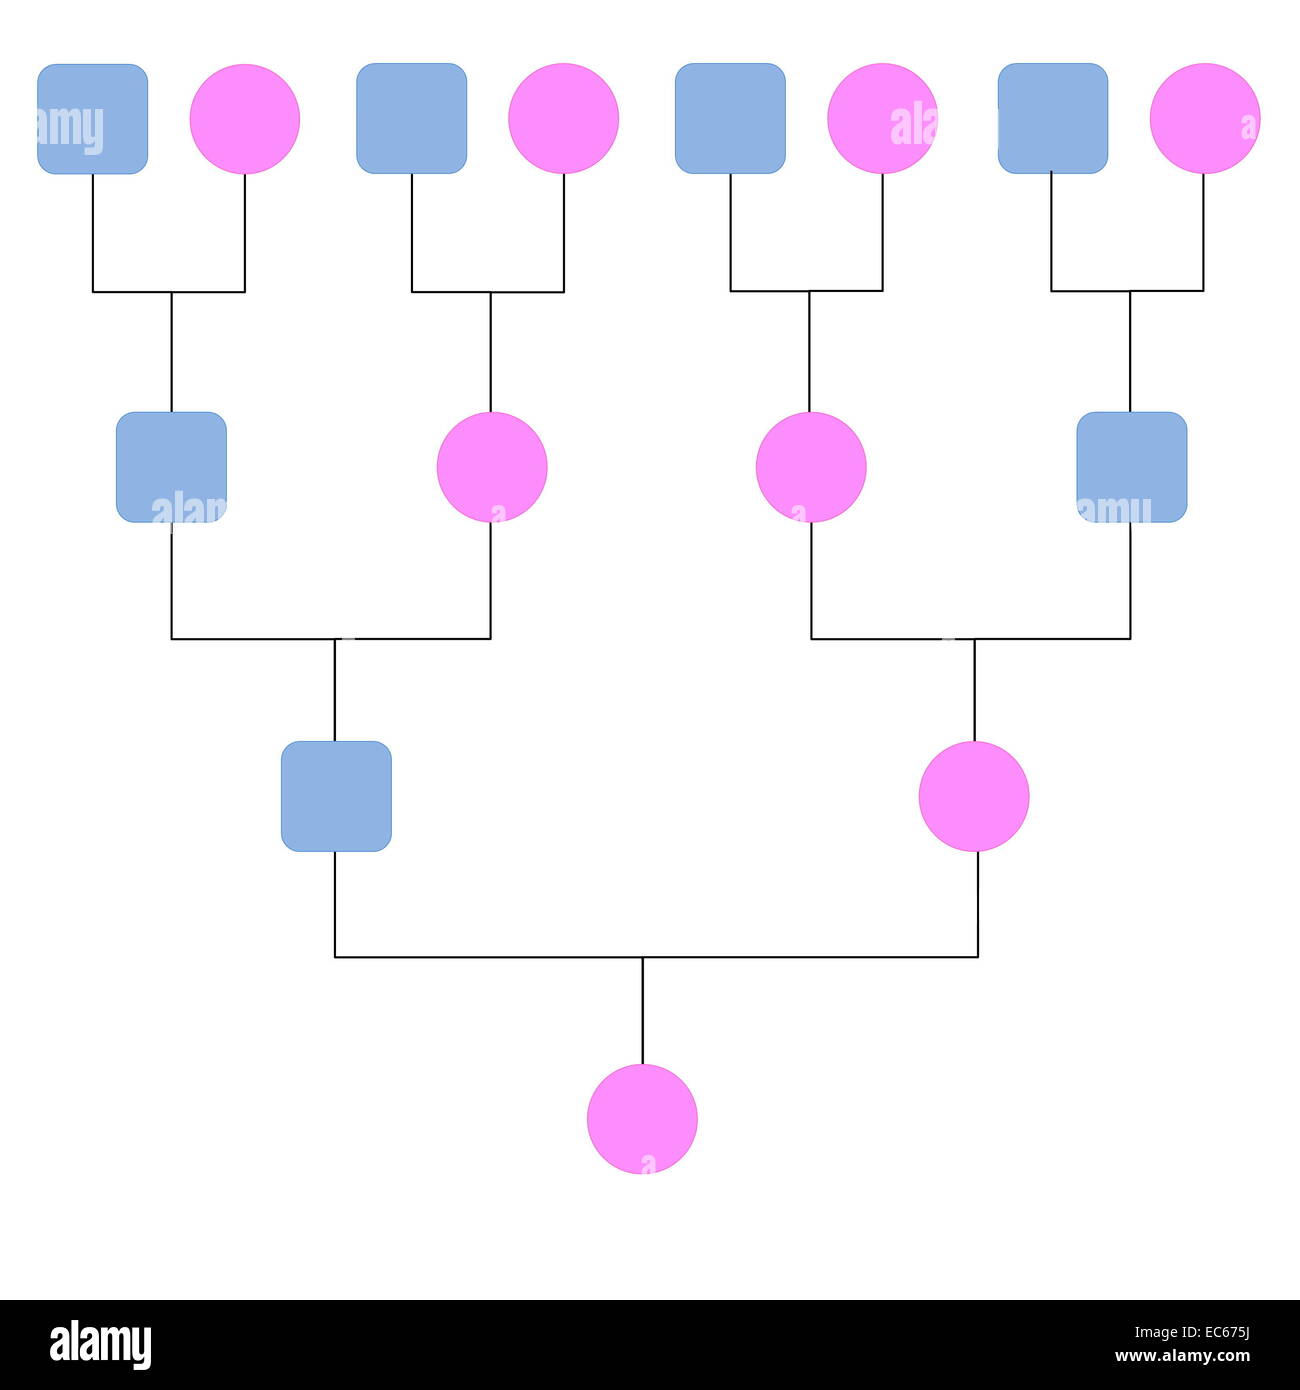 https://c8.alamy.com/comp/EC675J/symbolic-family-tree-with-pink-females-and-blue-males-EC675J.jpg